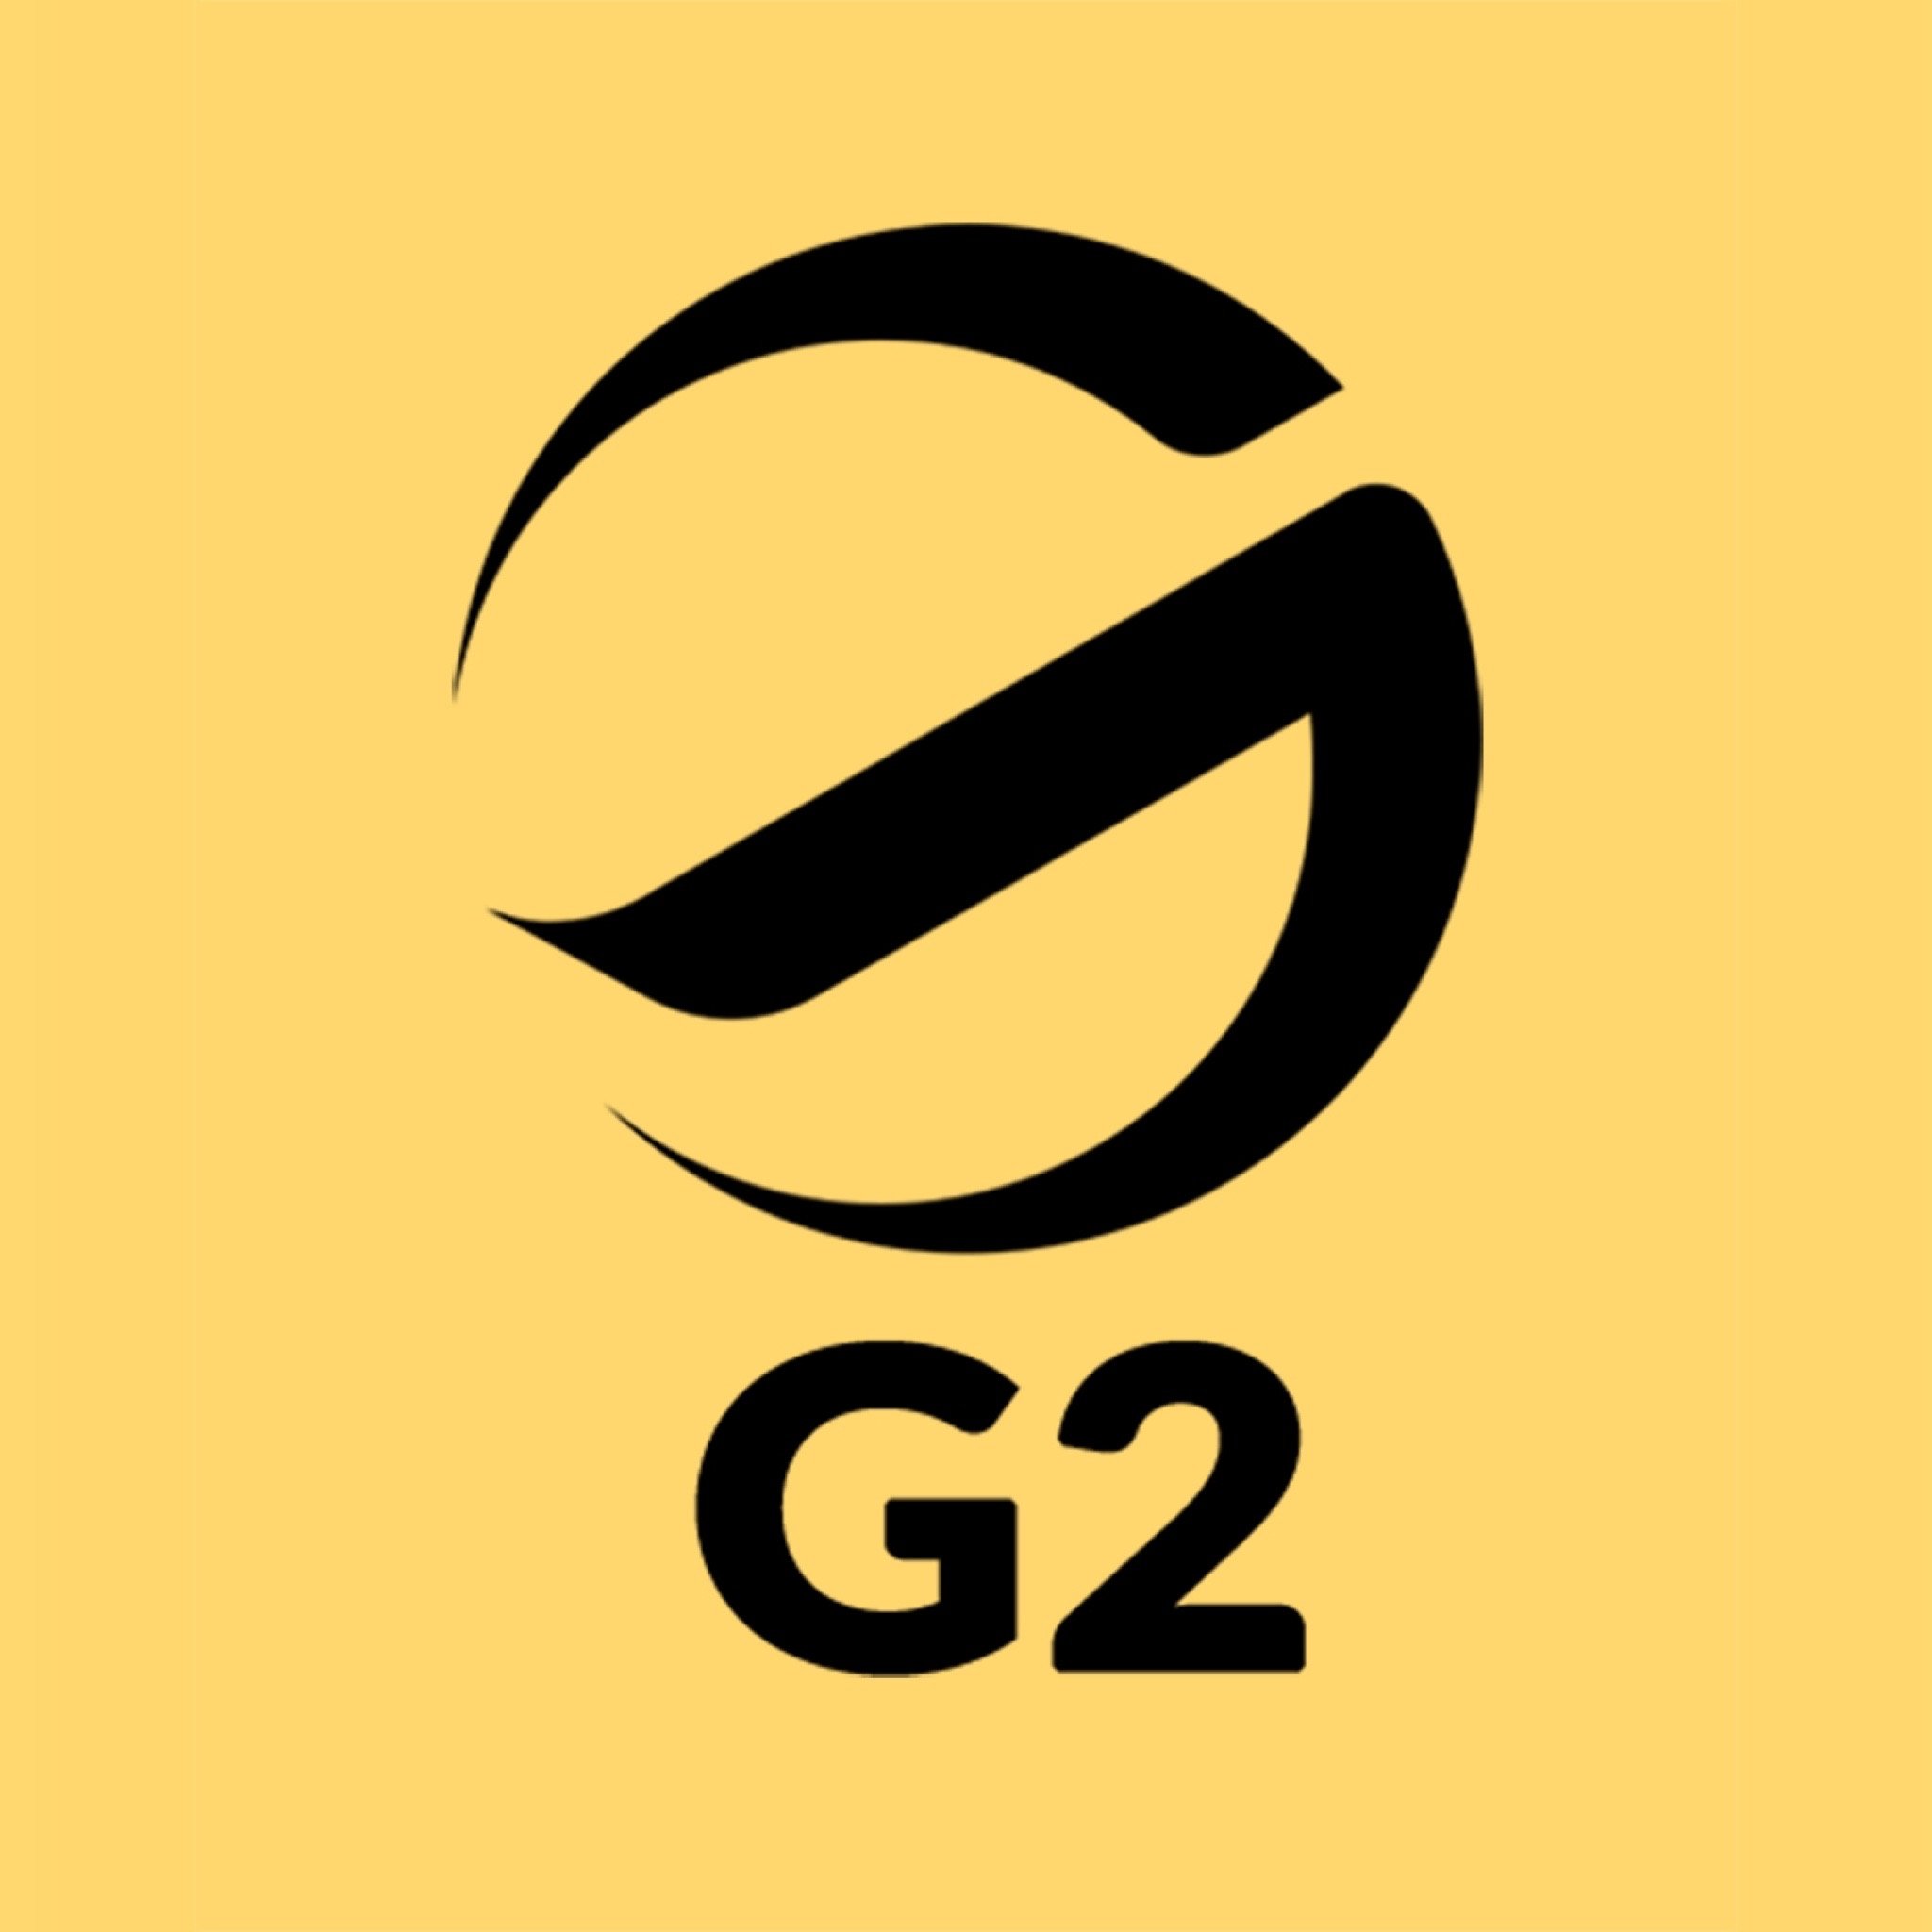 طراح UI | UI Designer - جی 2 هلدینگ | G2 Holding